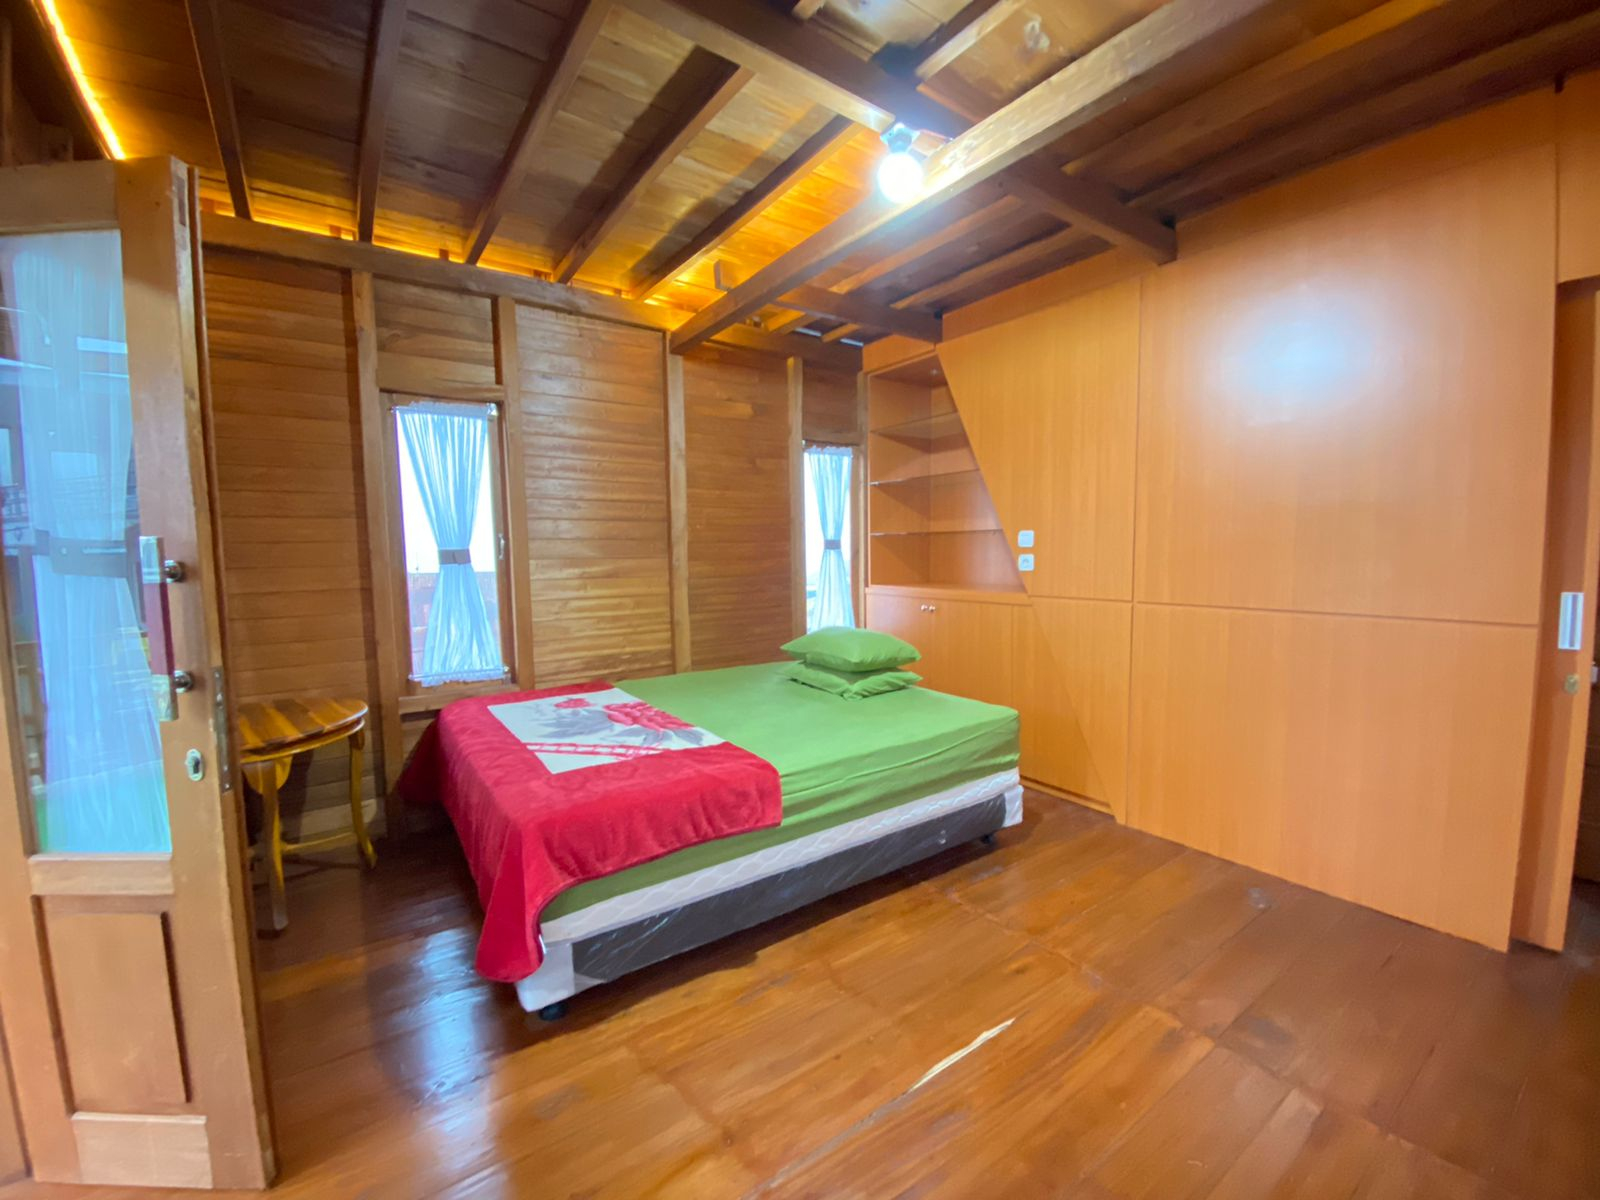 Bedroom 3, Lens villa, Karanganyar